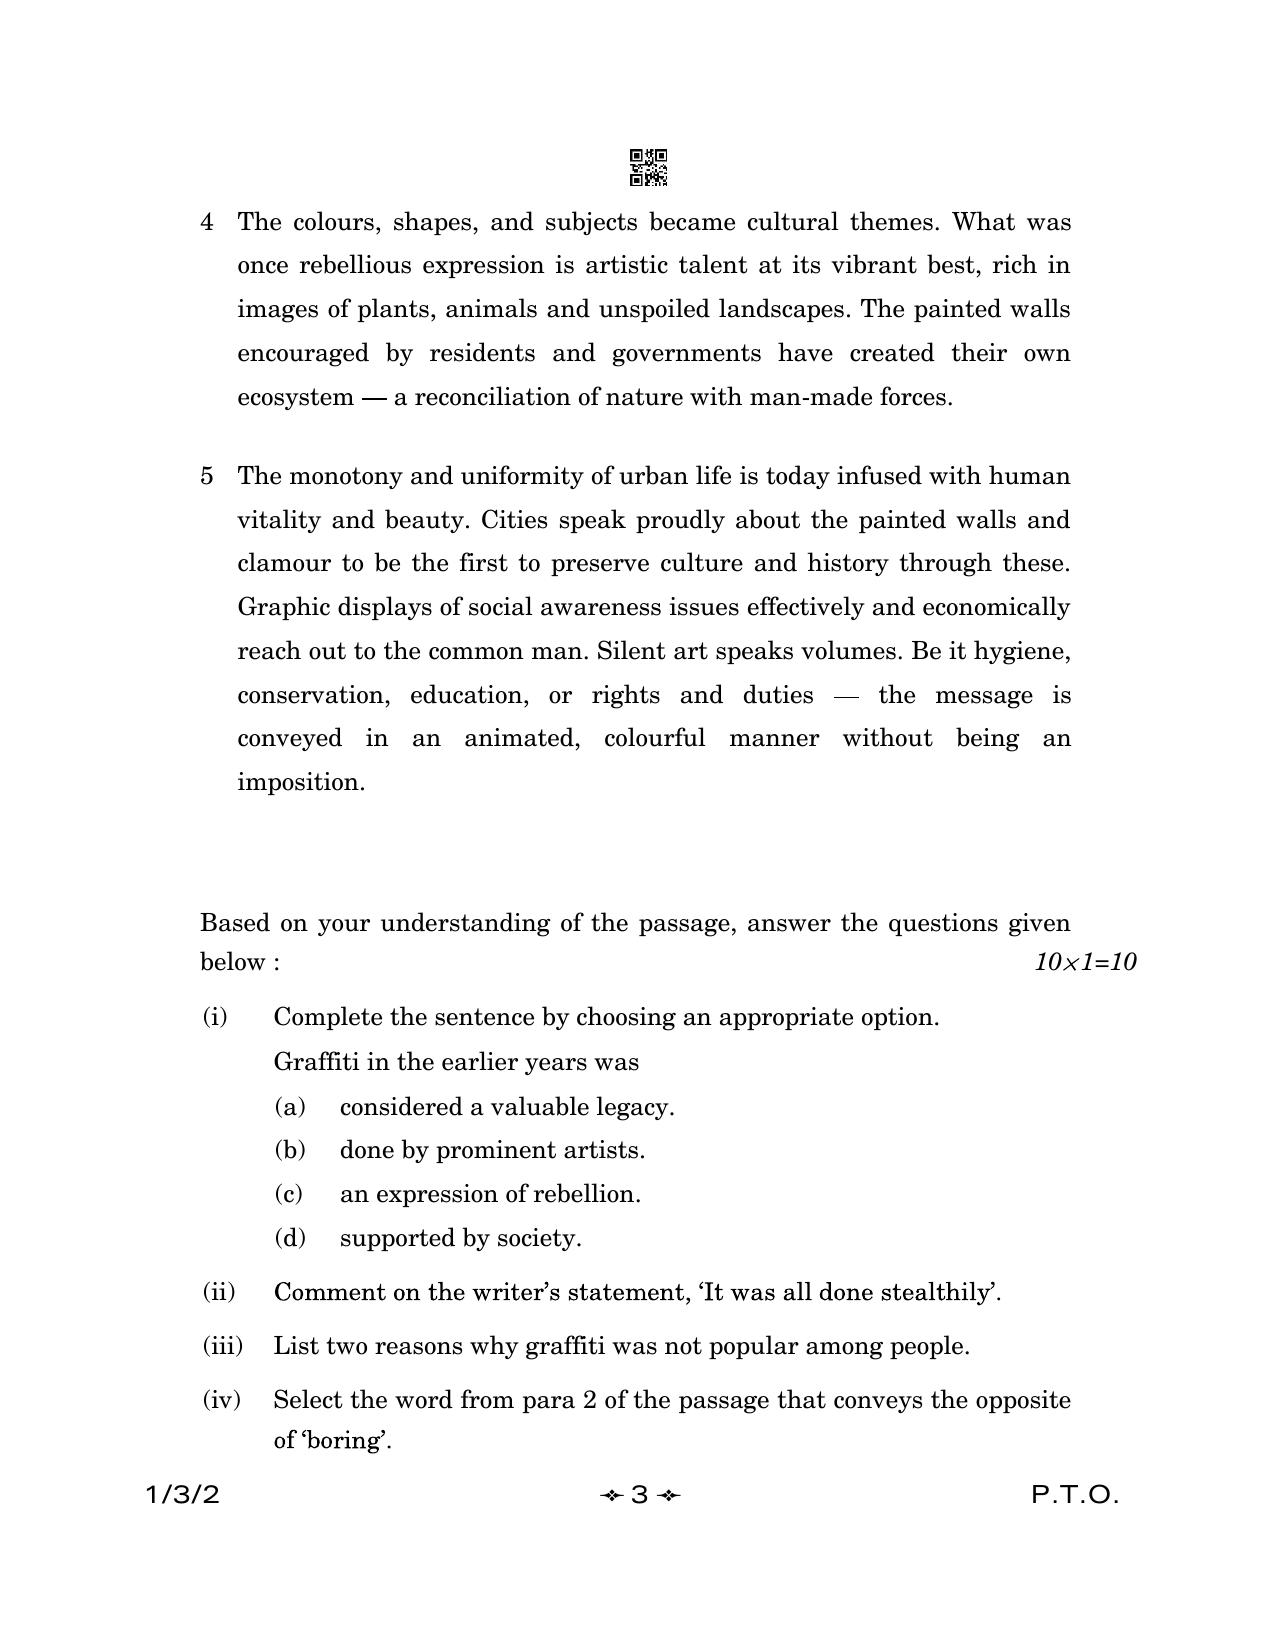 CBSE Class 12 1-3-2 English Core 2023 Question Paper - Page 3